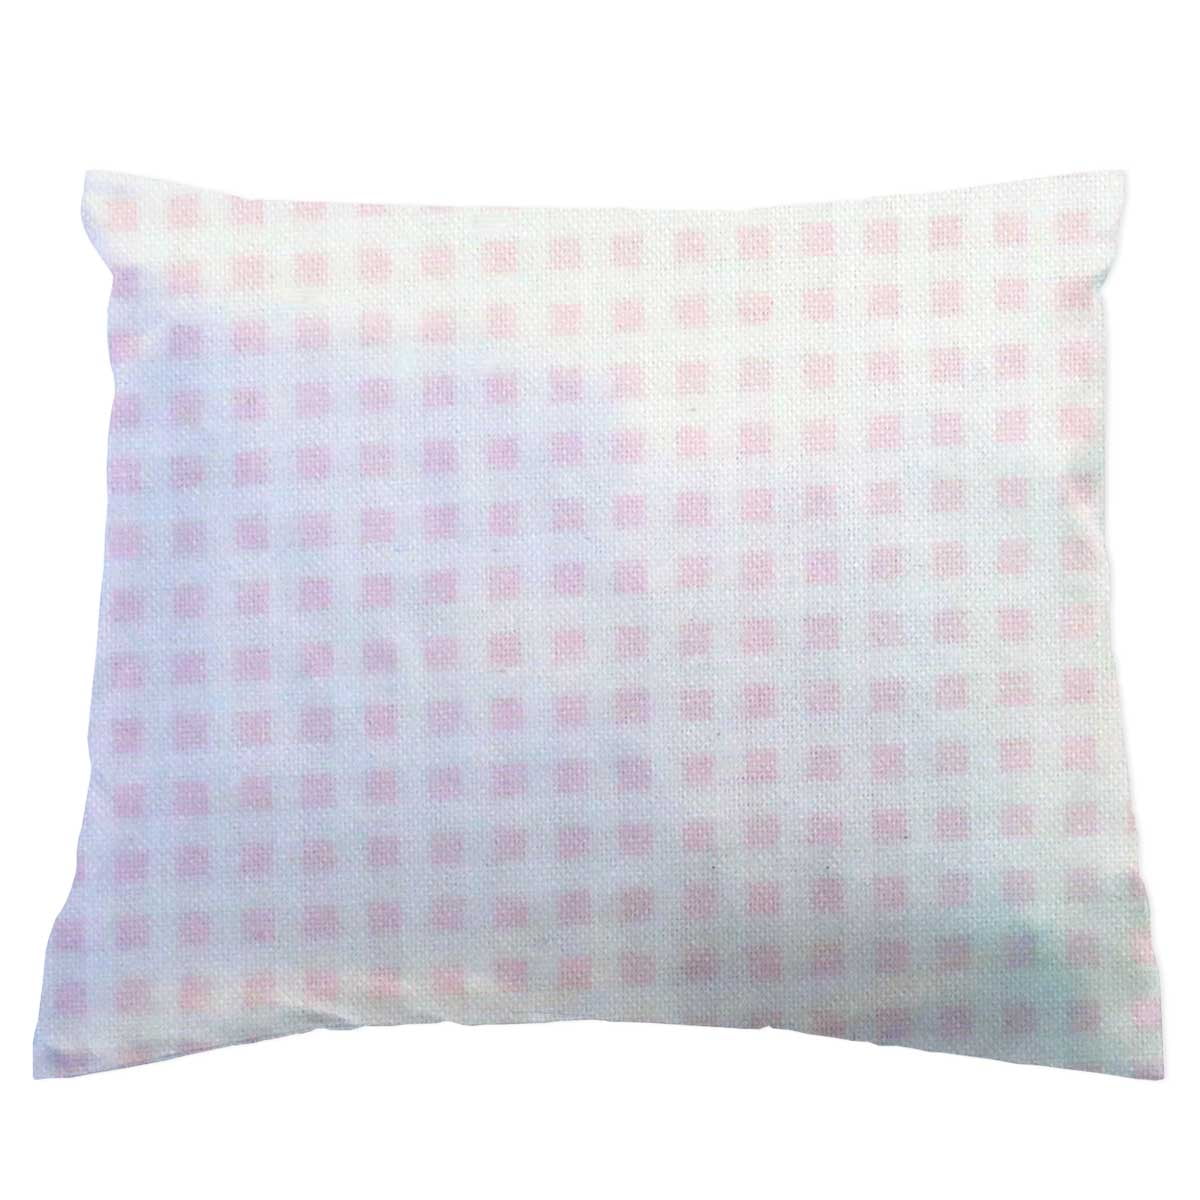 100% Cotton Jersey Knit SheetWorld Toddler Pillow Case 13 x 17 Solid Aqua 